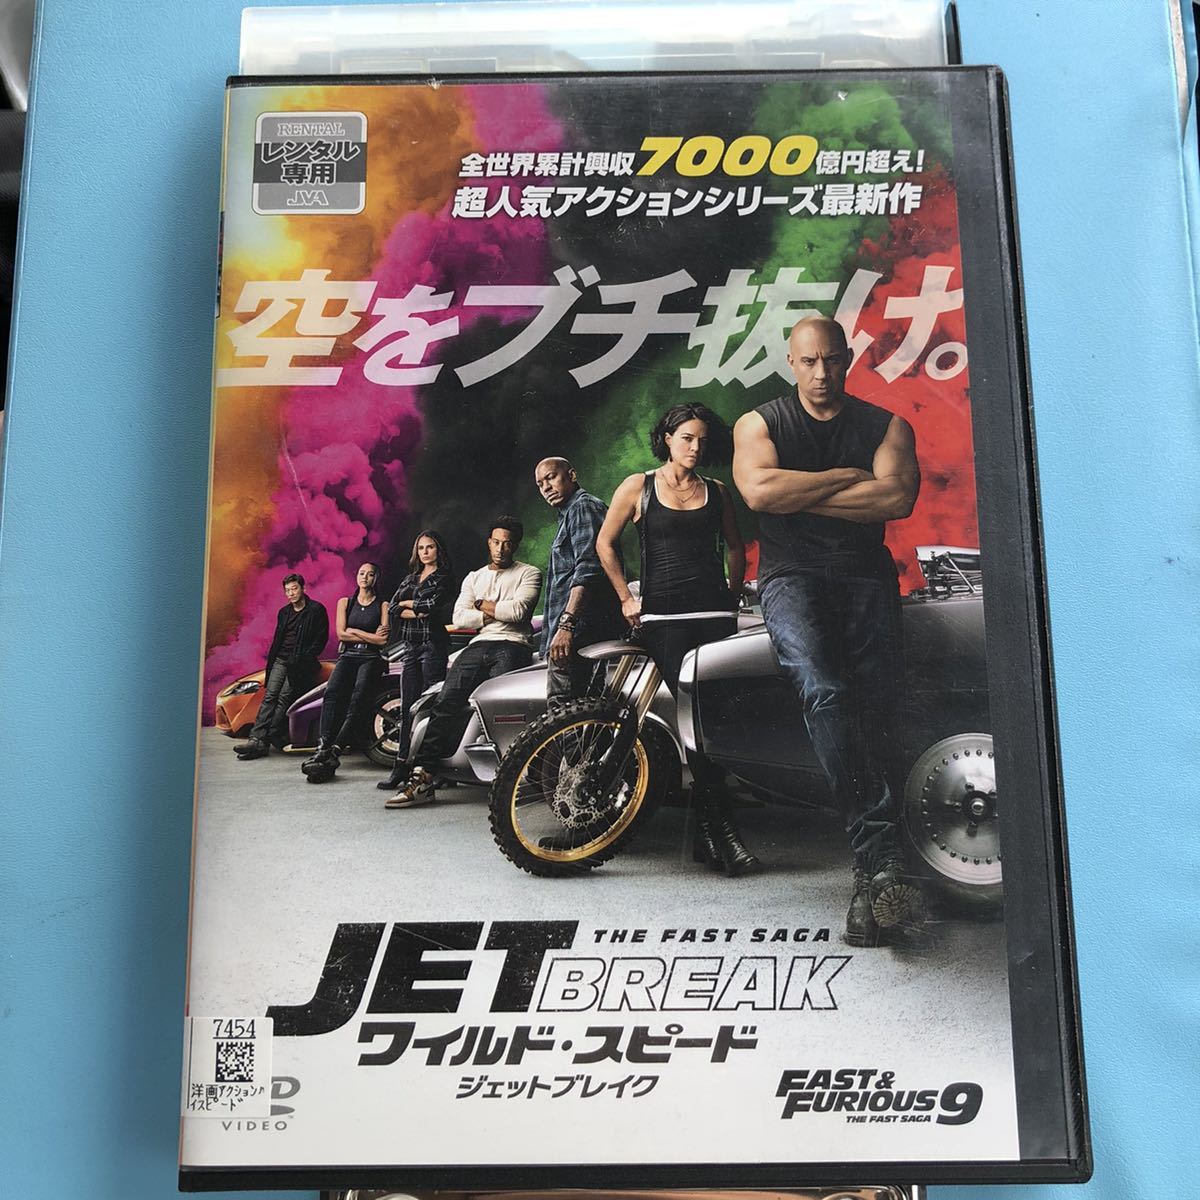  wild * Speed jet break DVD